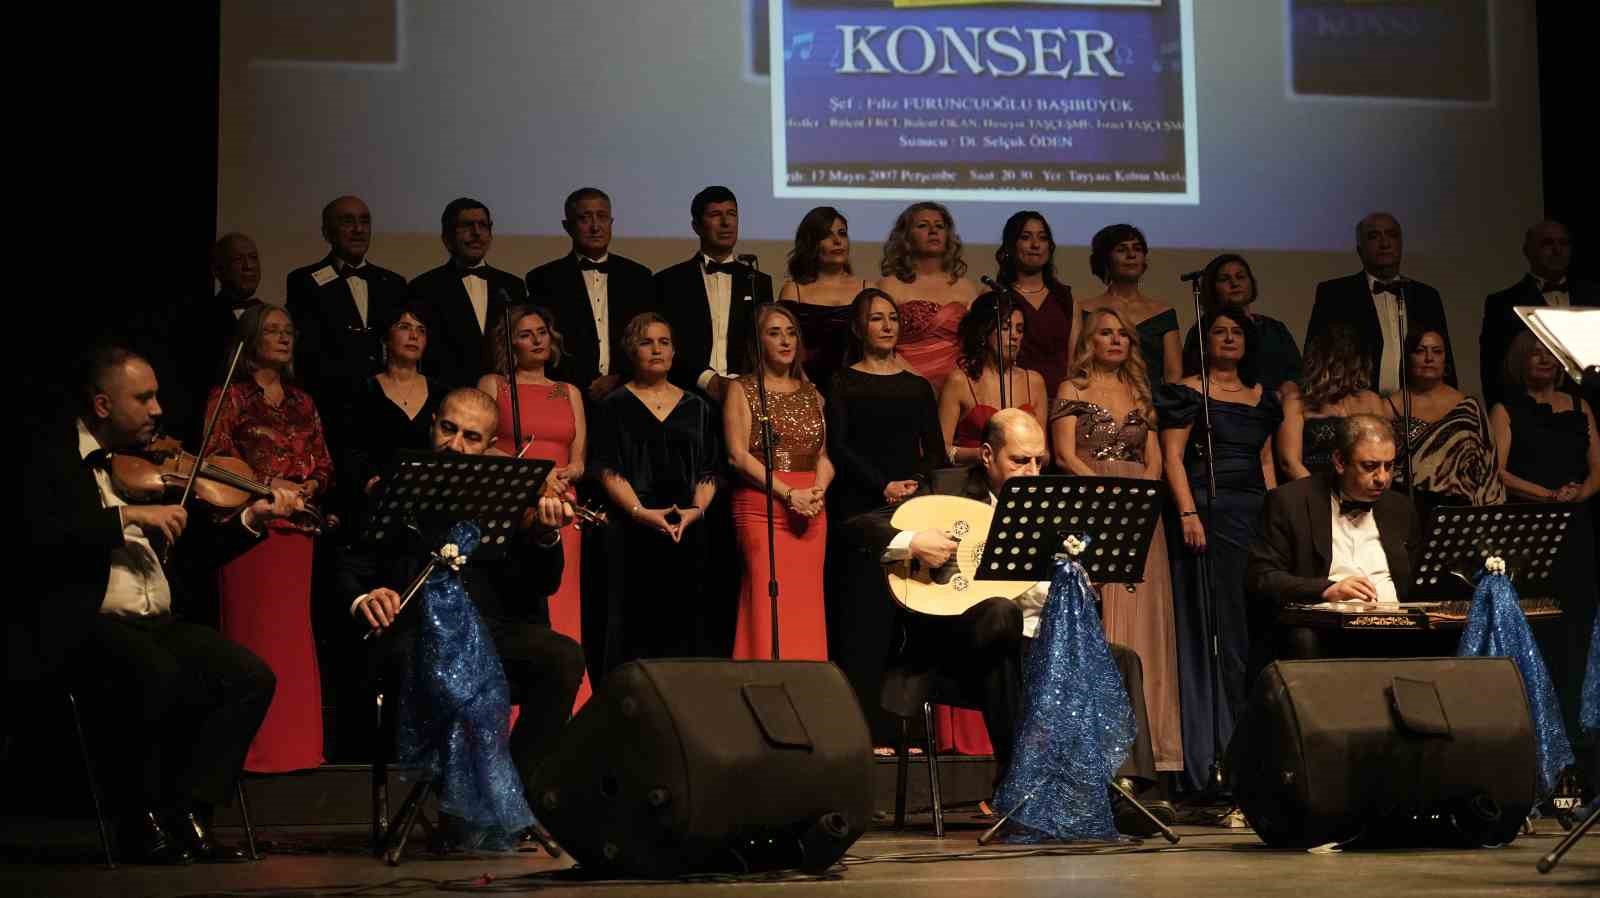 Bursa’da sanatseverlere unutulmaz konser